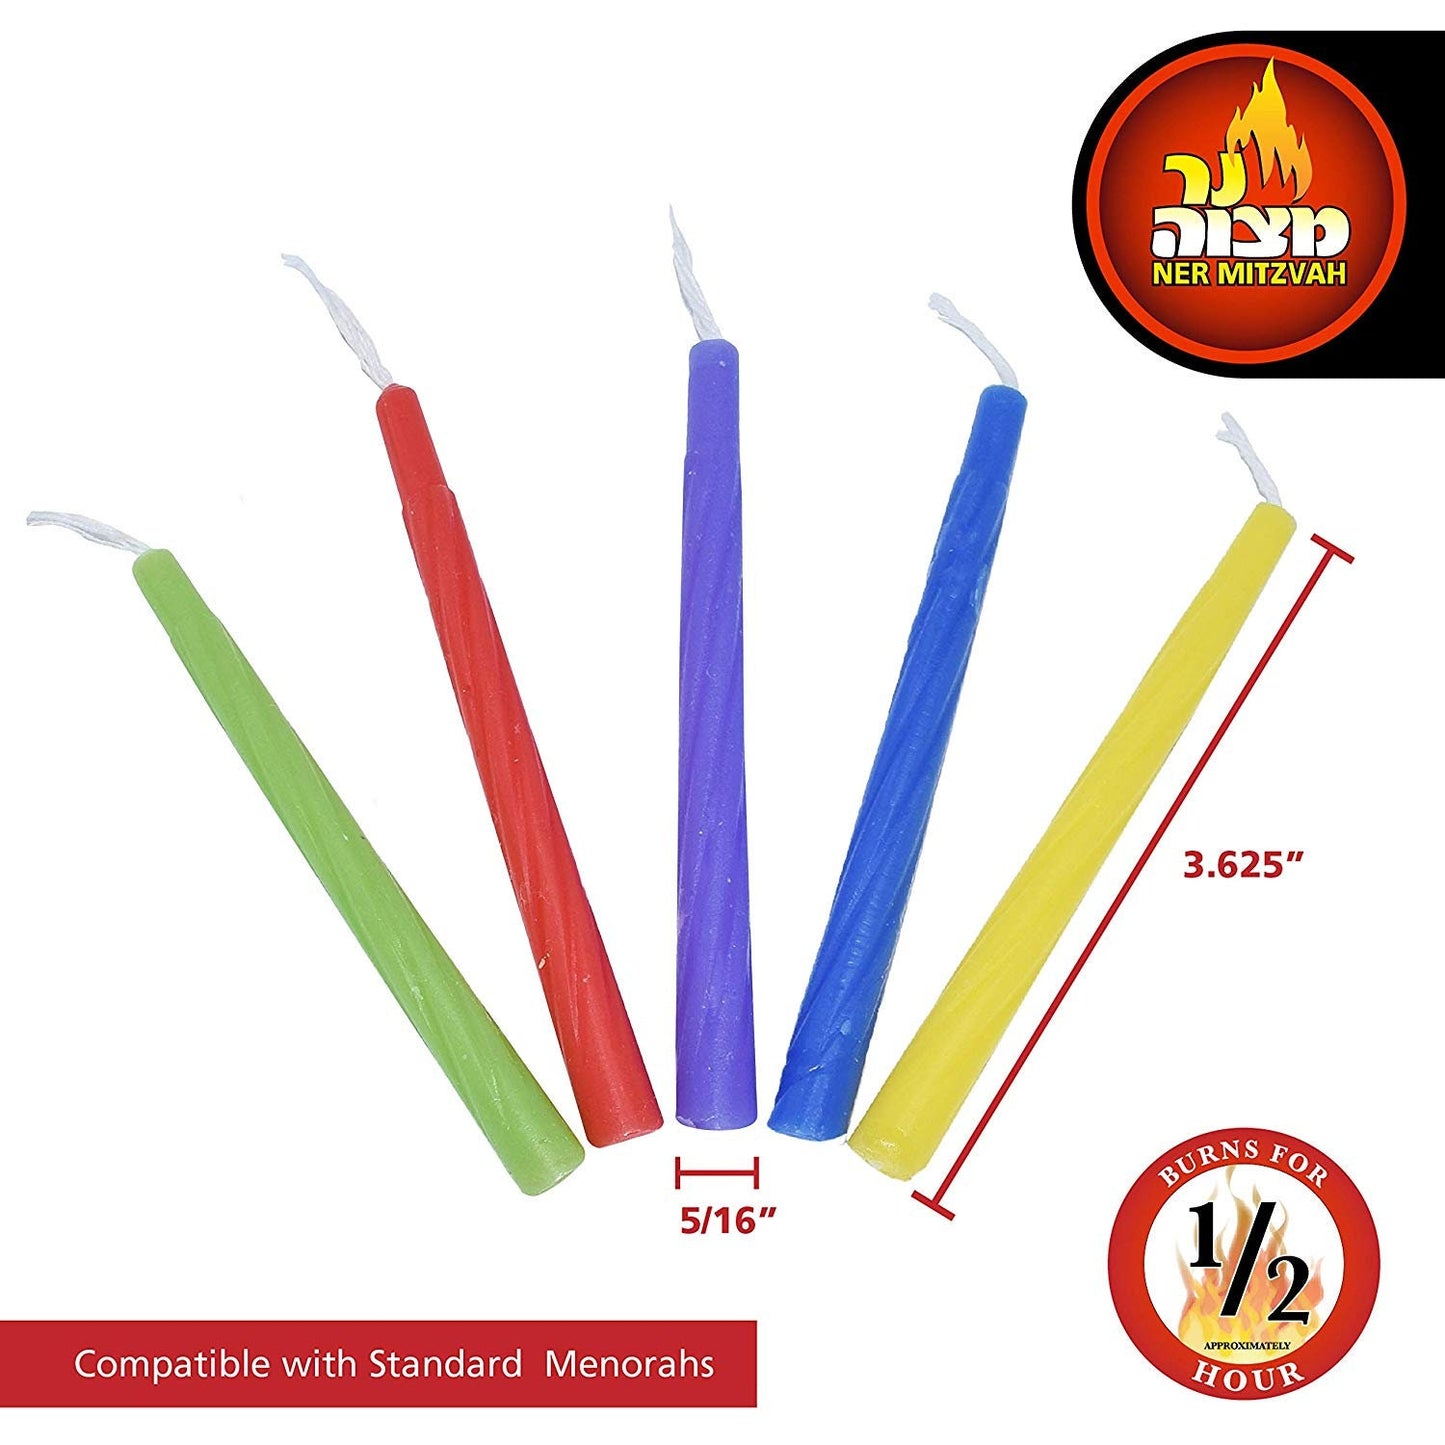 Mitzvah Colorful Menorah Candles-44 Candles